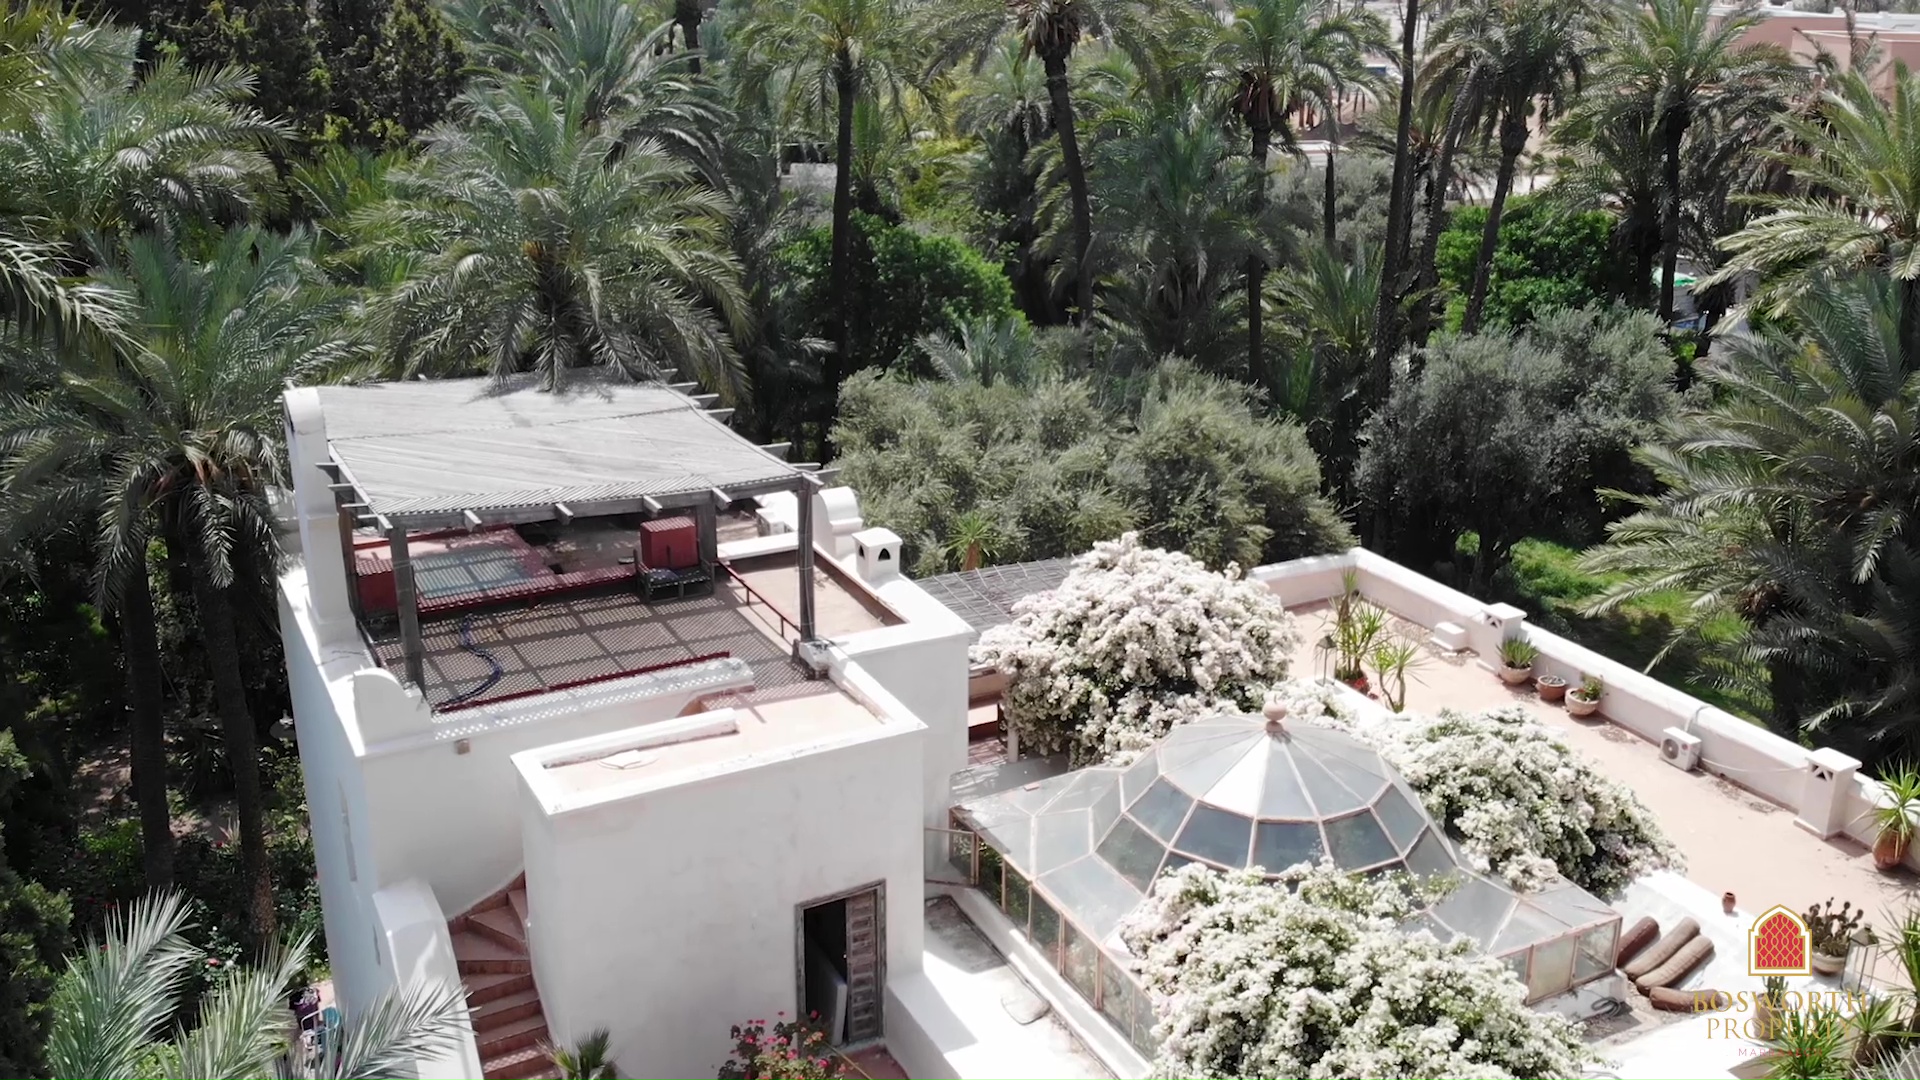 Villa storica di lusso in vendita a Marrakech Palmeraie - Proprietà di lusso a Marrakech - Villa in vendita a Marrakech - Marrakech Real Estate - Marrakesh Realty - immobilier marrakech - villa a vendre marrakech